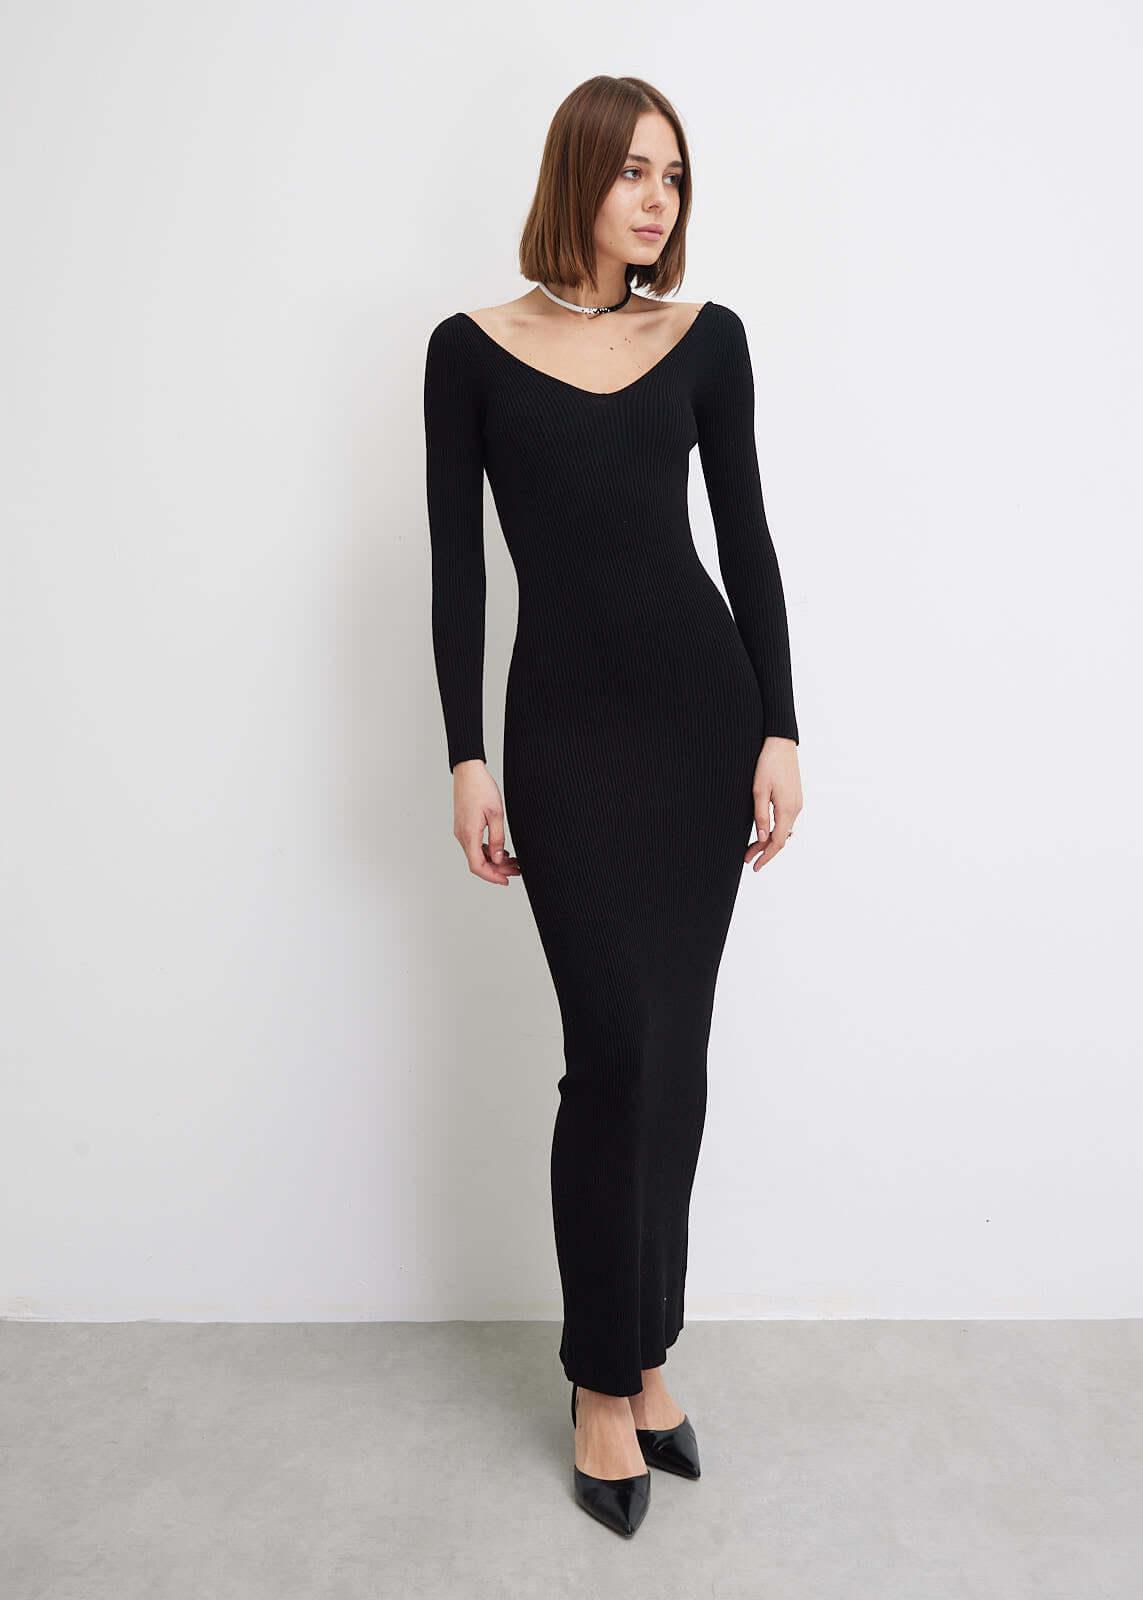 0202 black maxi dress